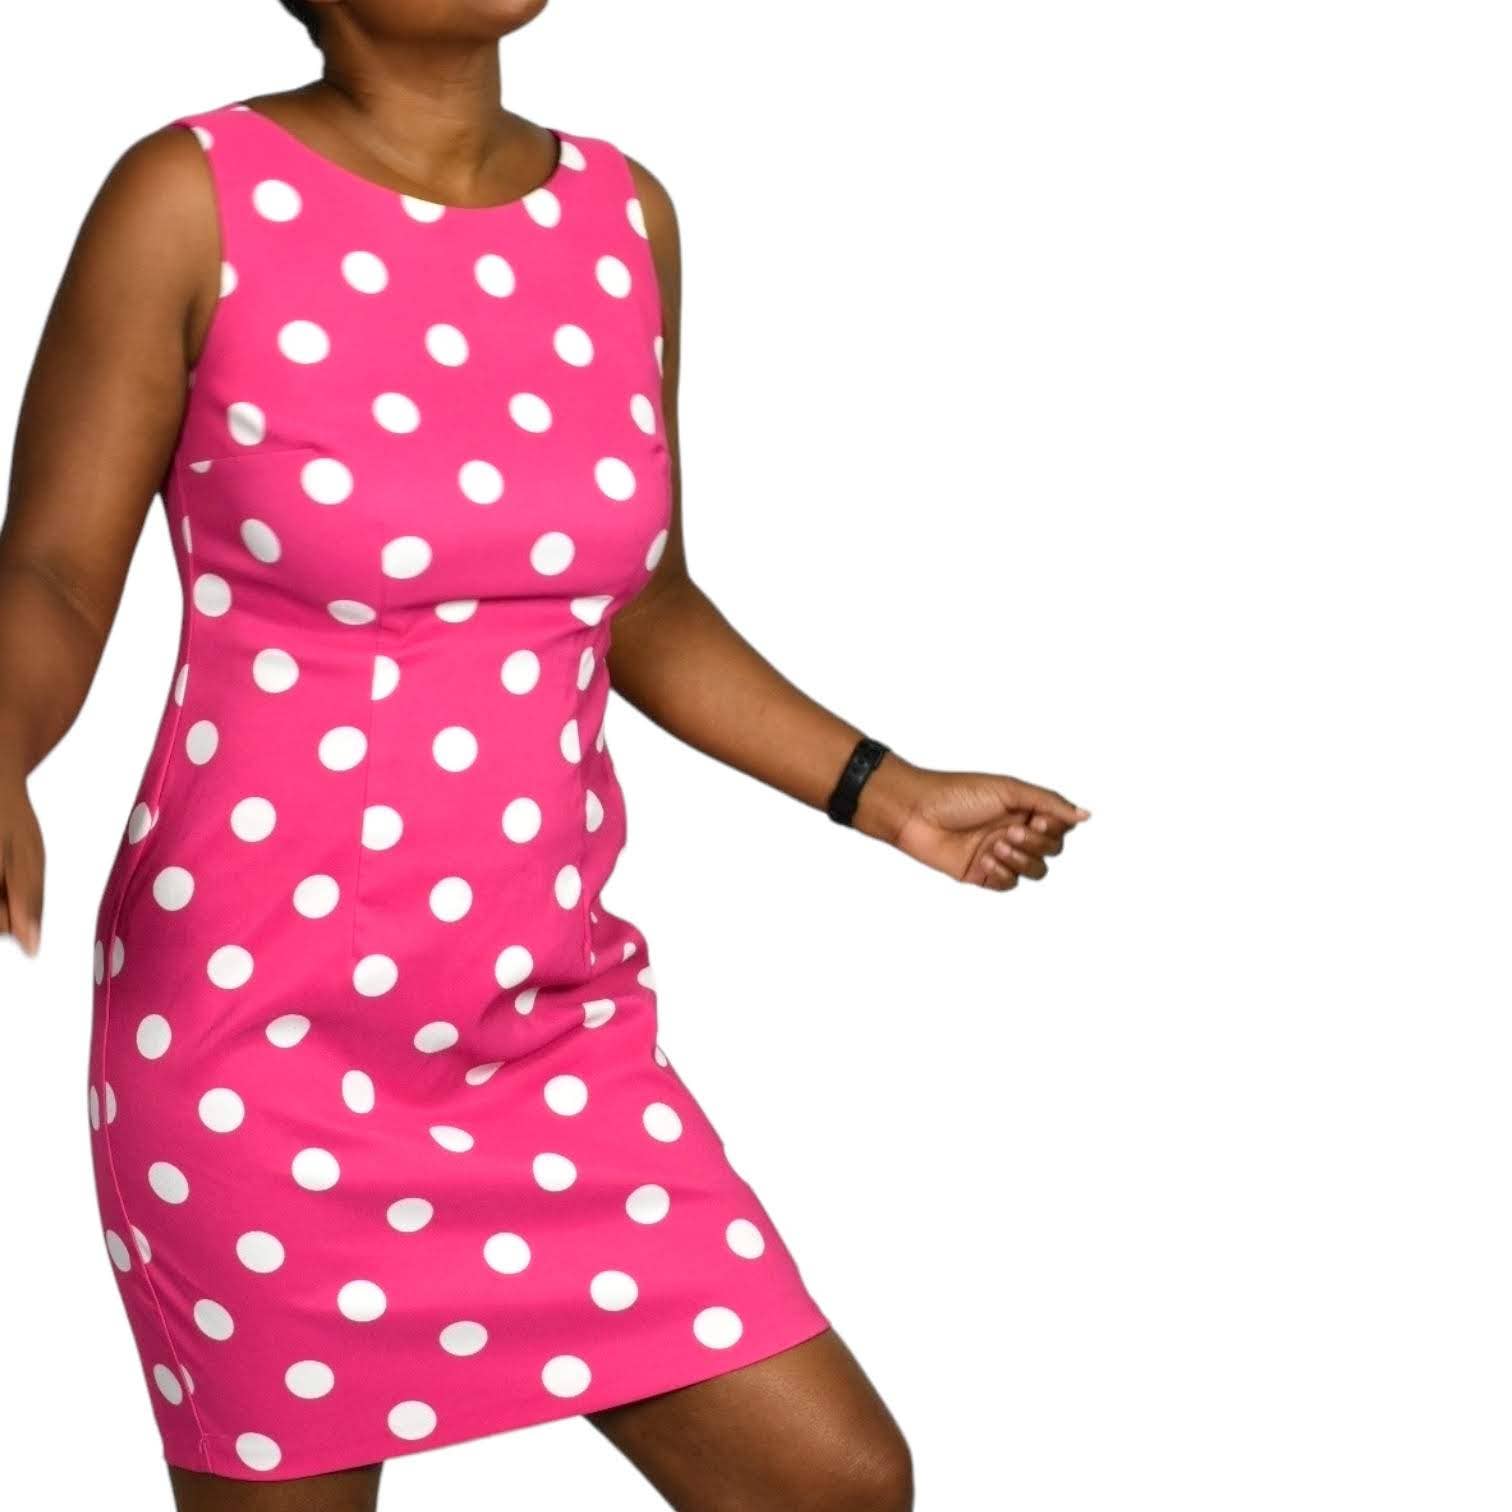 ALYX Pink Polka Dot Dress Sleeveless Sheath Classic Knee Length Party Occasion Size 4